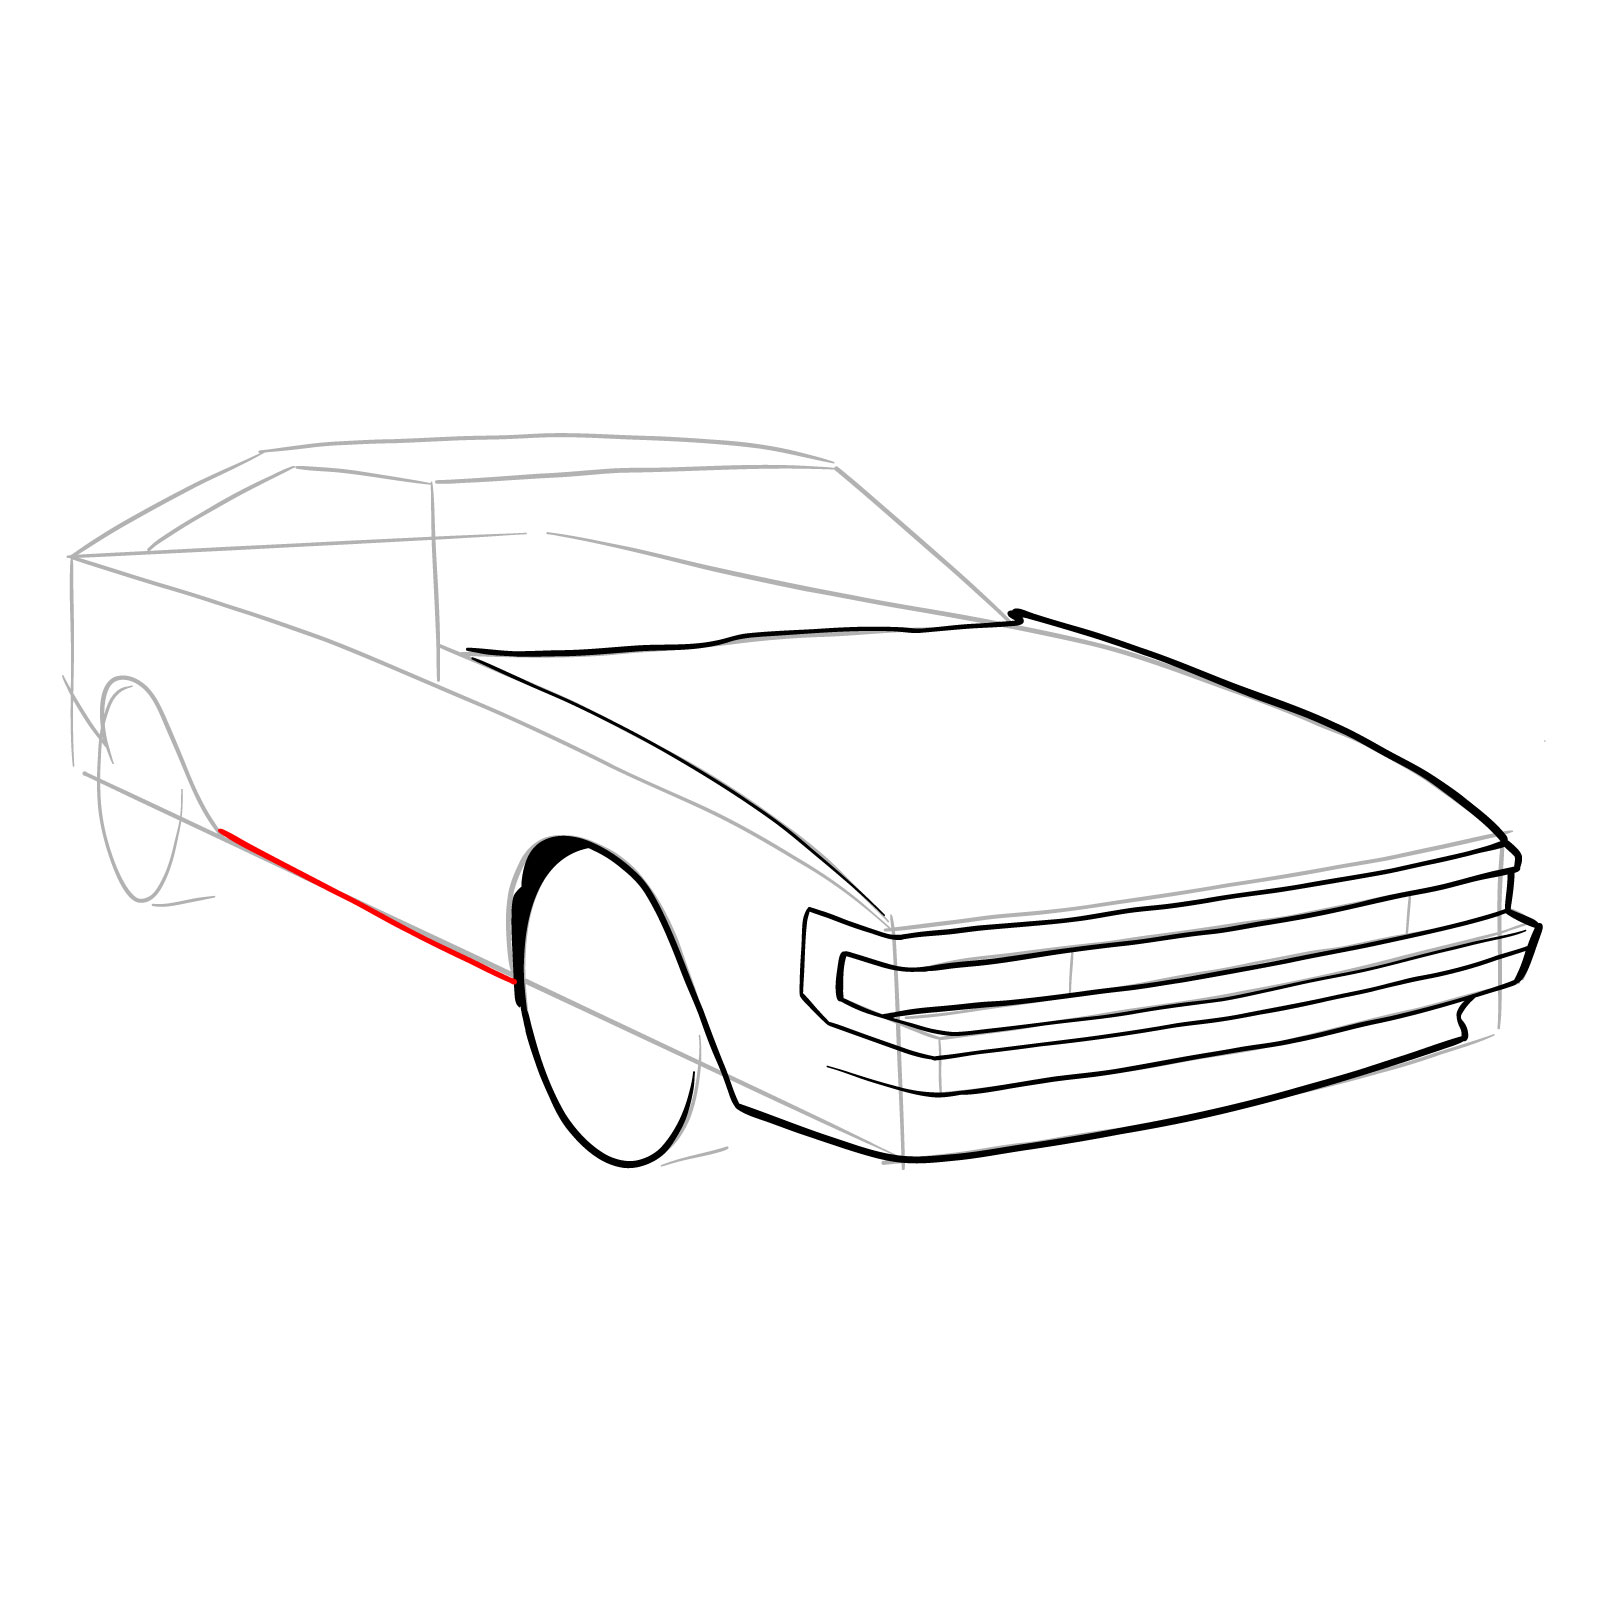 How to draw a 1985 Toyota Celica Supra P Type MK 2 - step 12